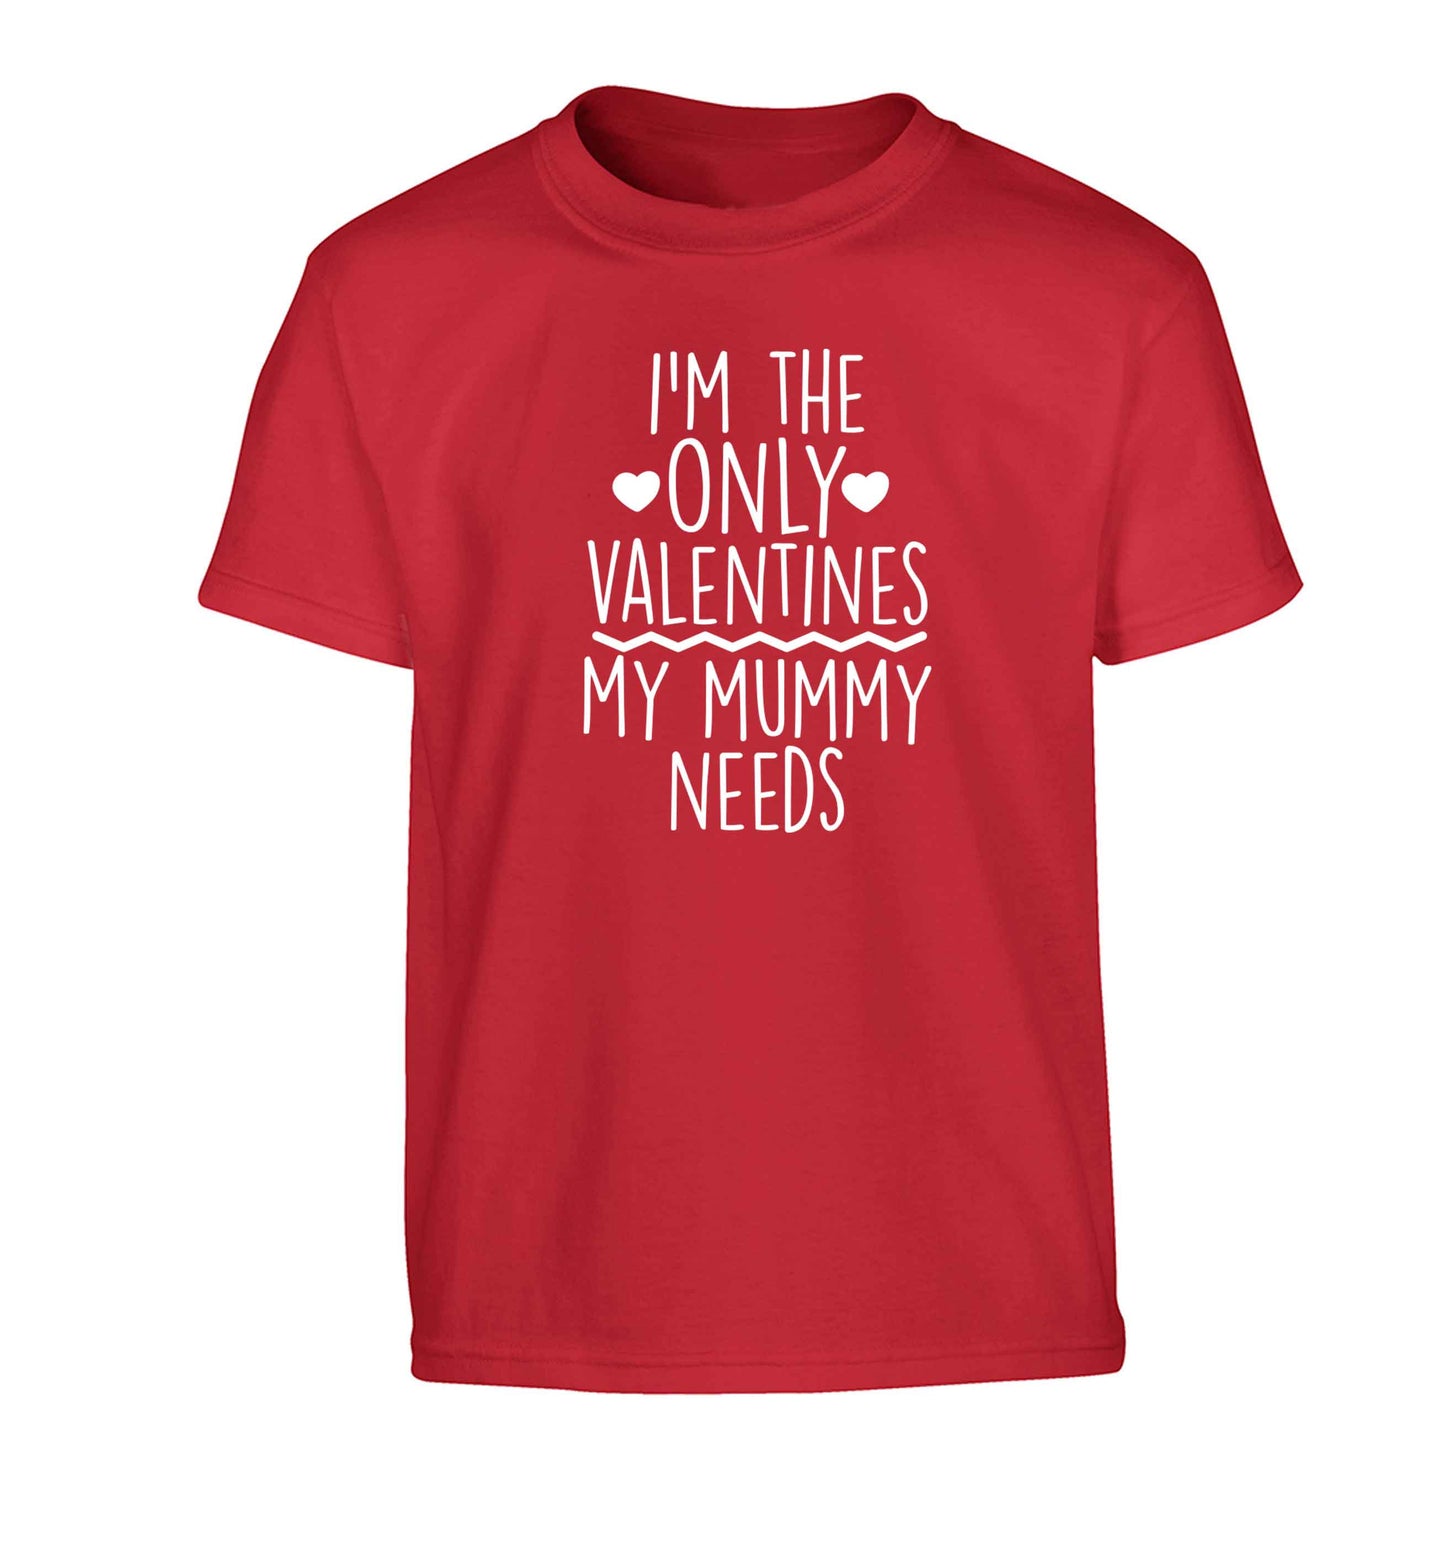 I'm the only valentines my mummy needs Children's red Tshirt 12-13 Years